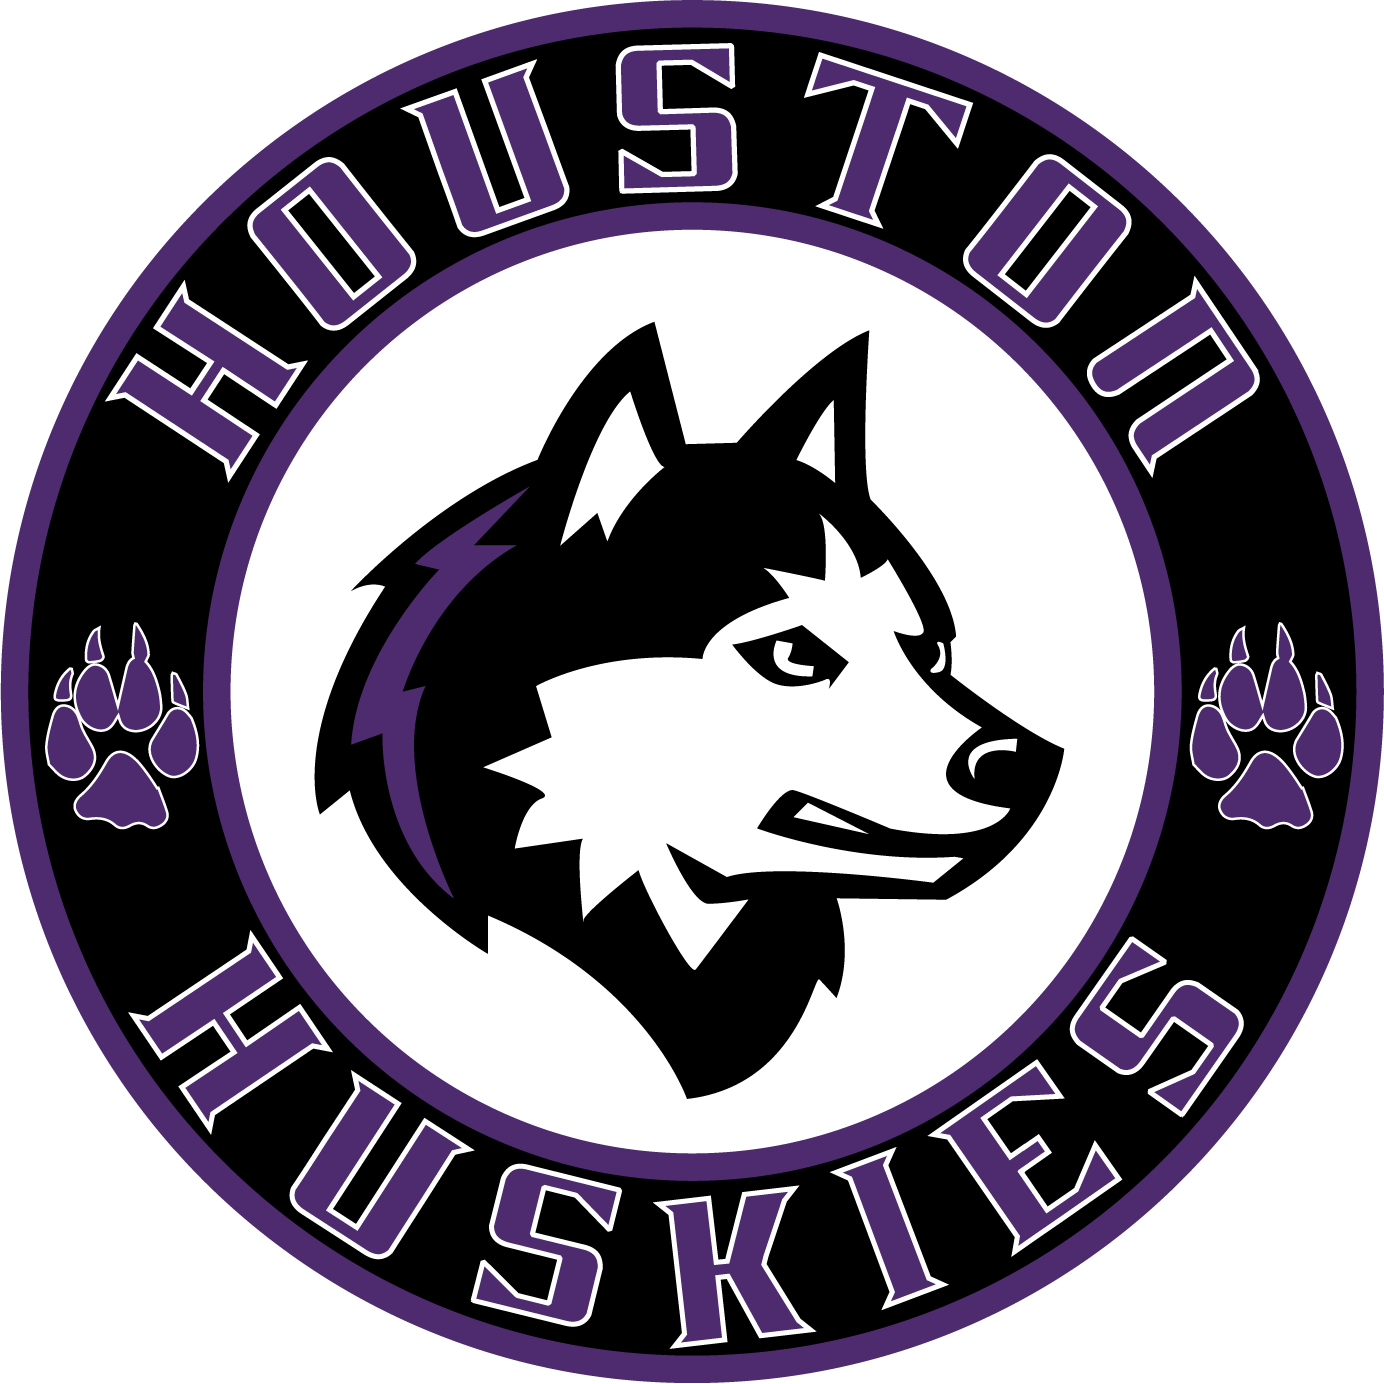 Houston Logo - New Hampton School (1384x1384)